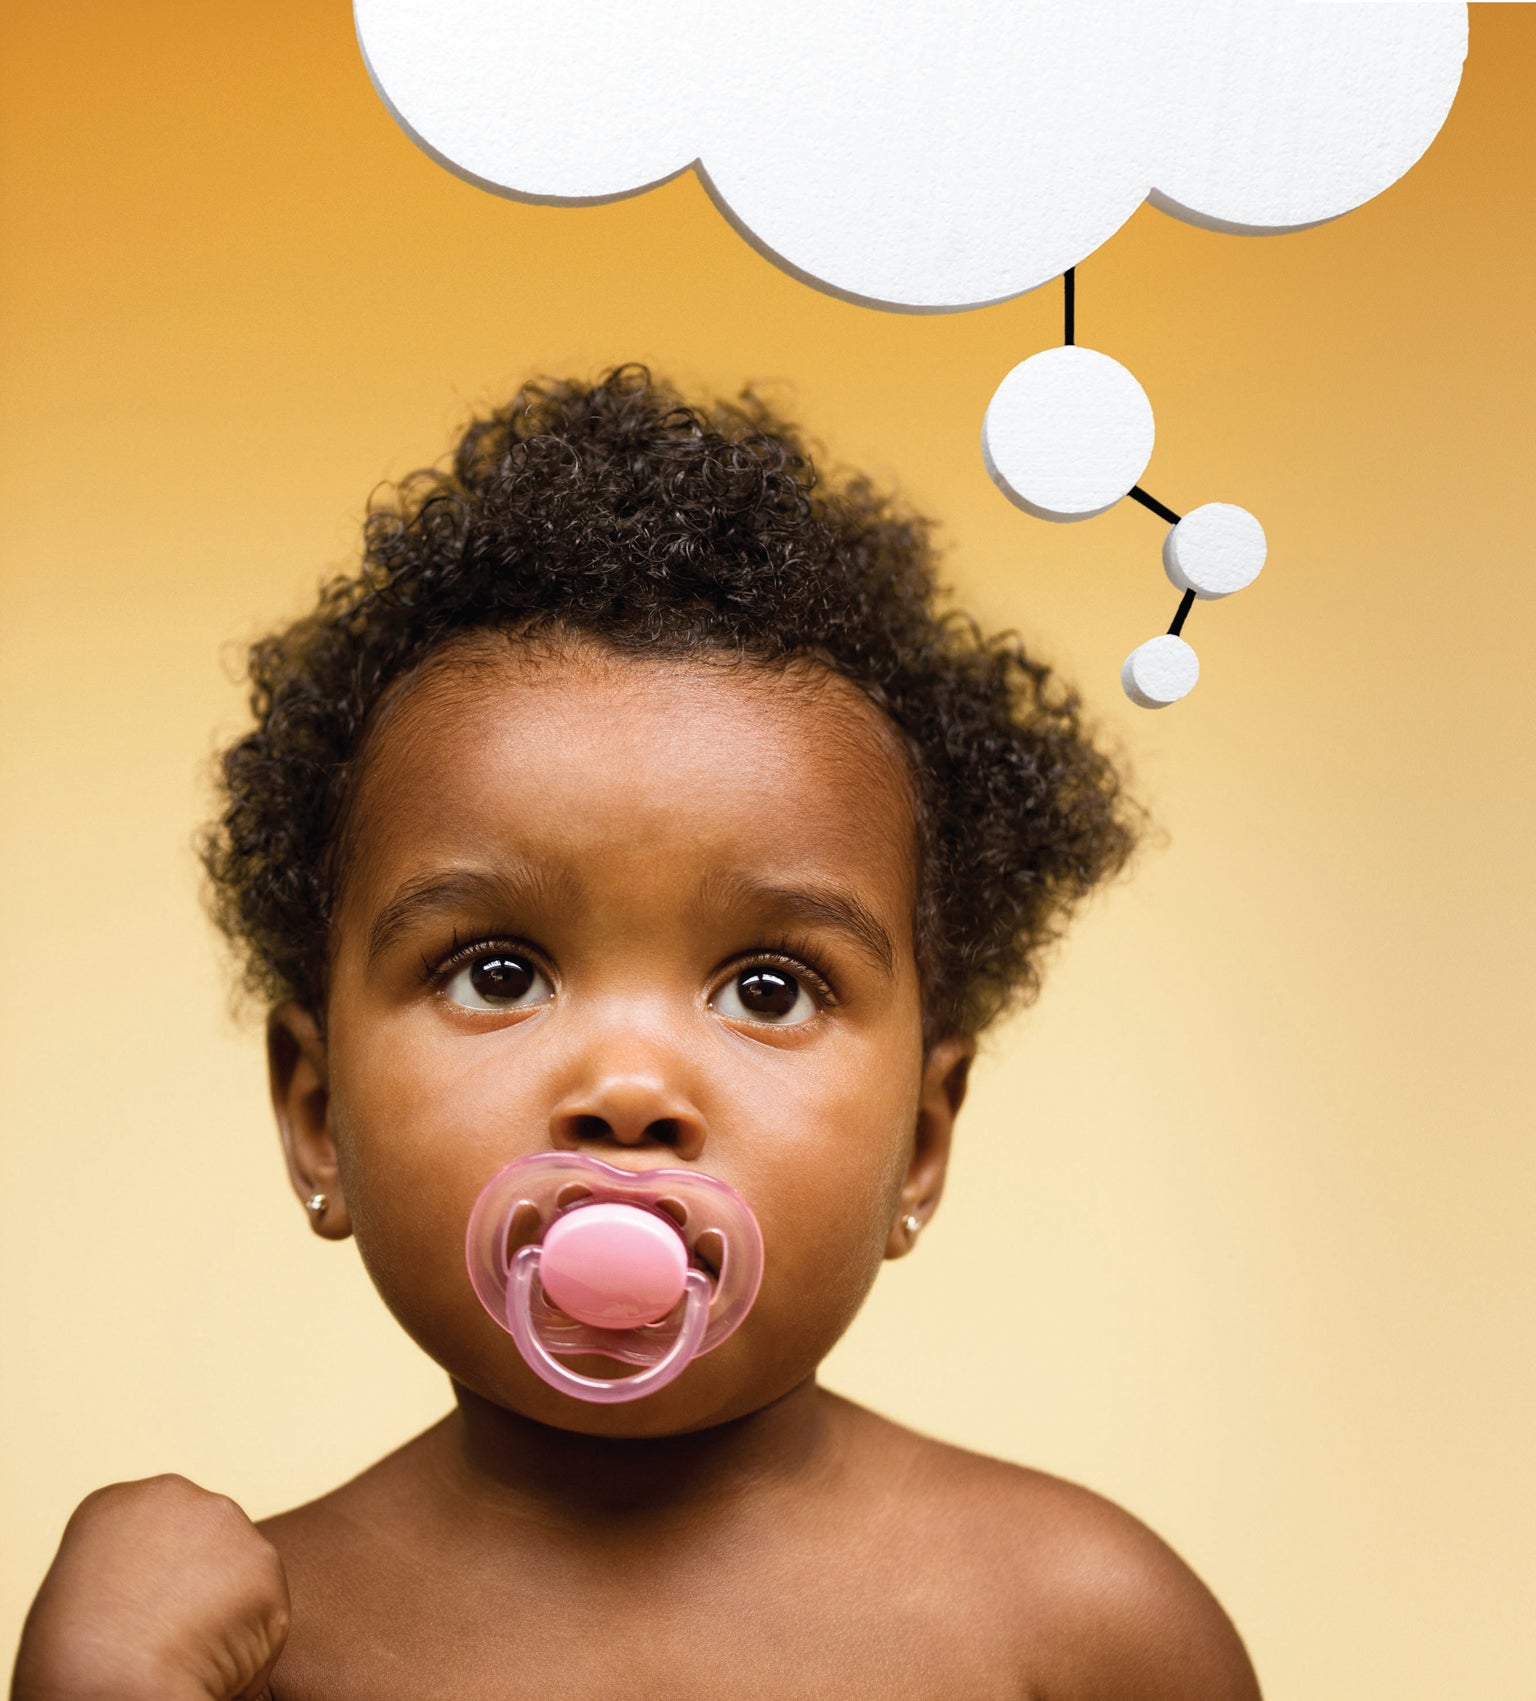 Little Scientists: Babies Have Scientific Minds - Scientific American